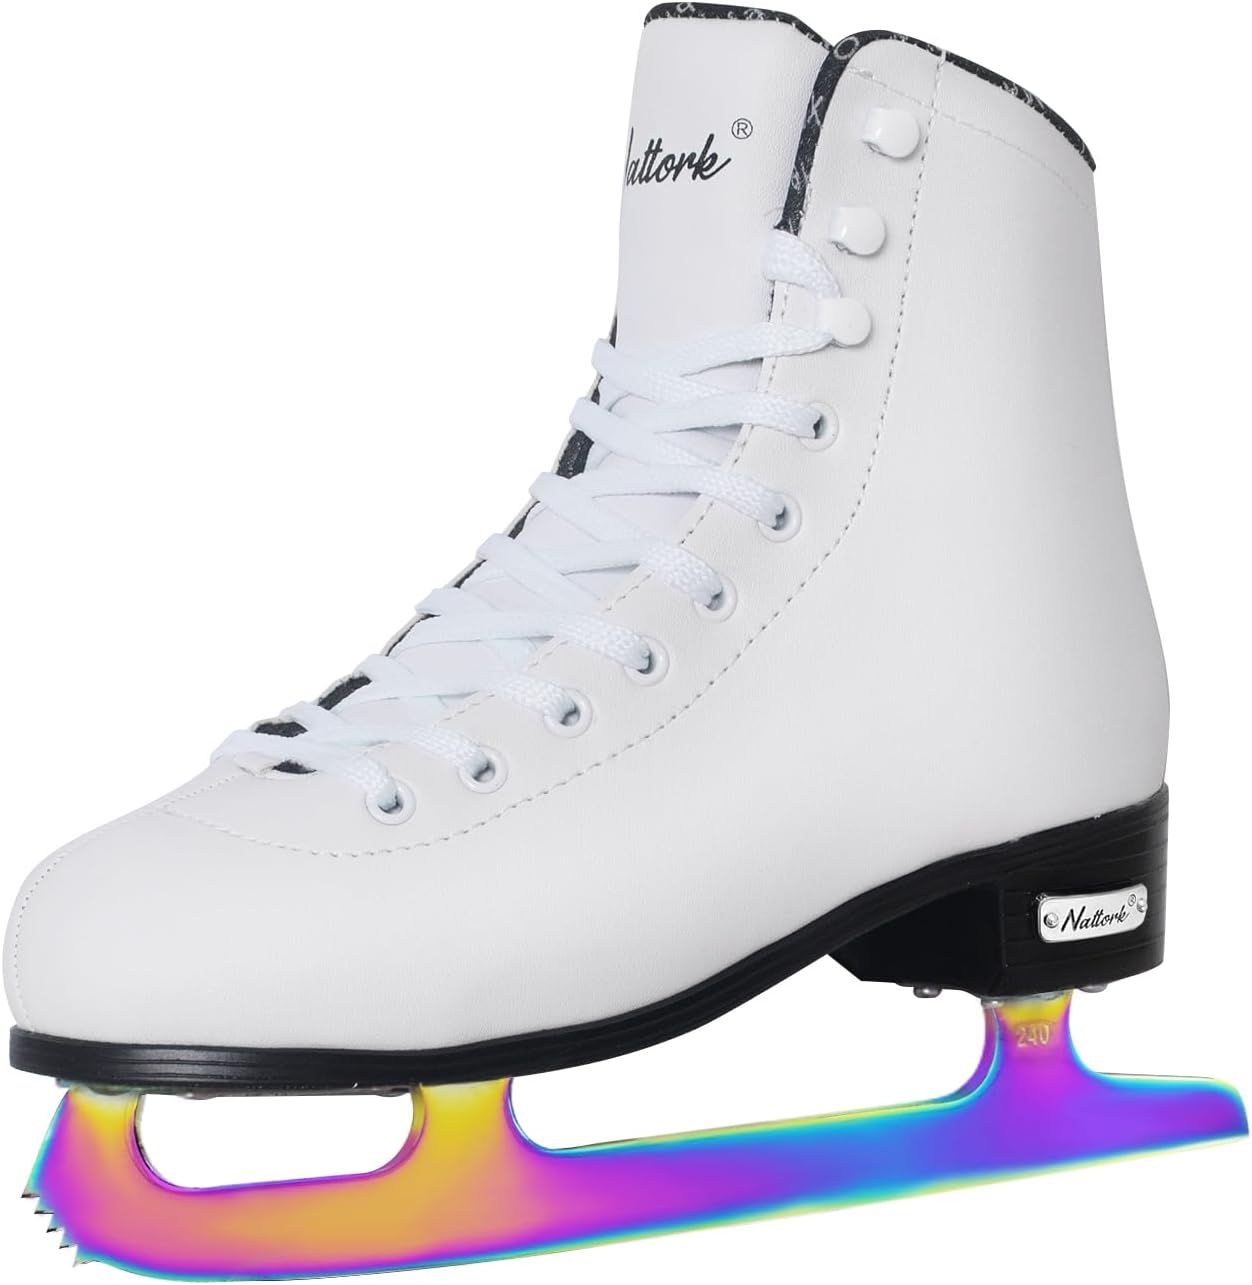 Nattork Ice Figure Skates - WHITE & Color Blades